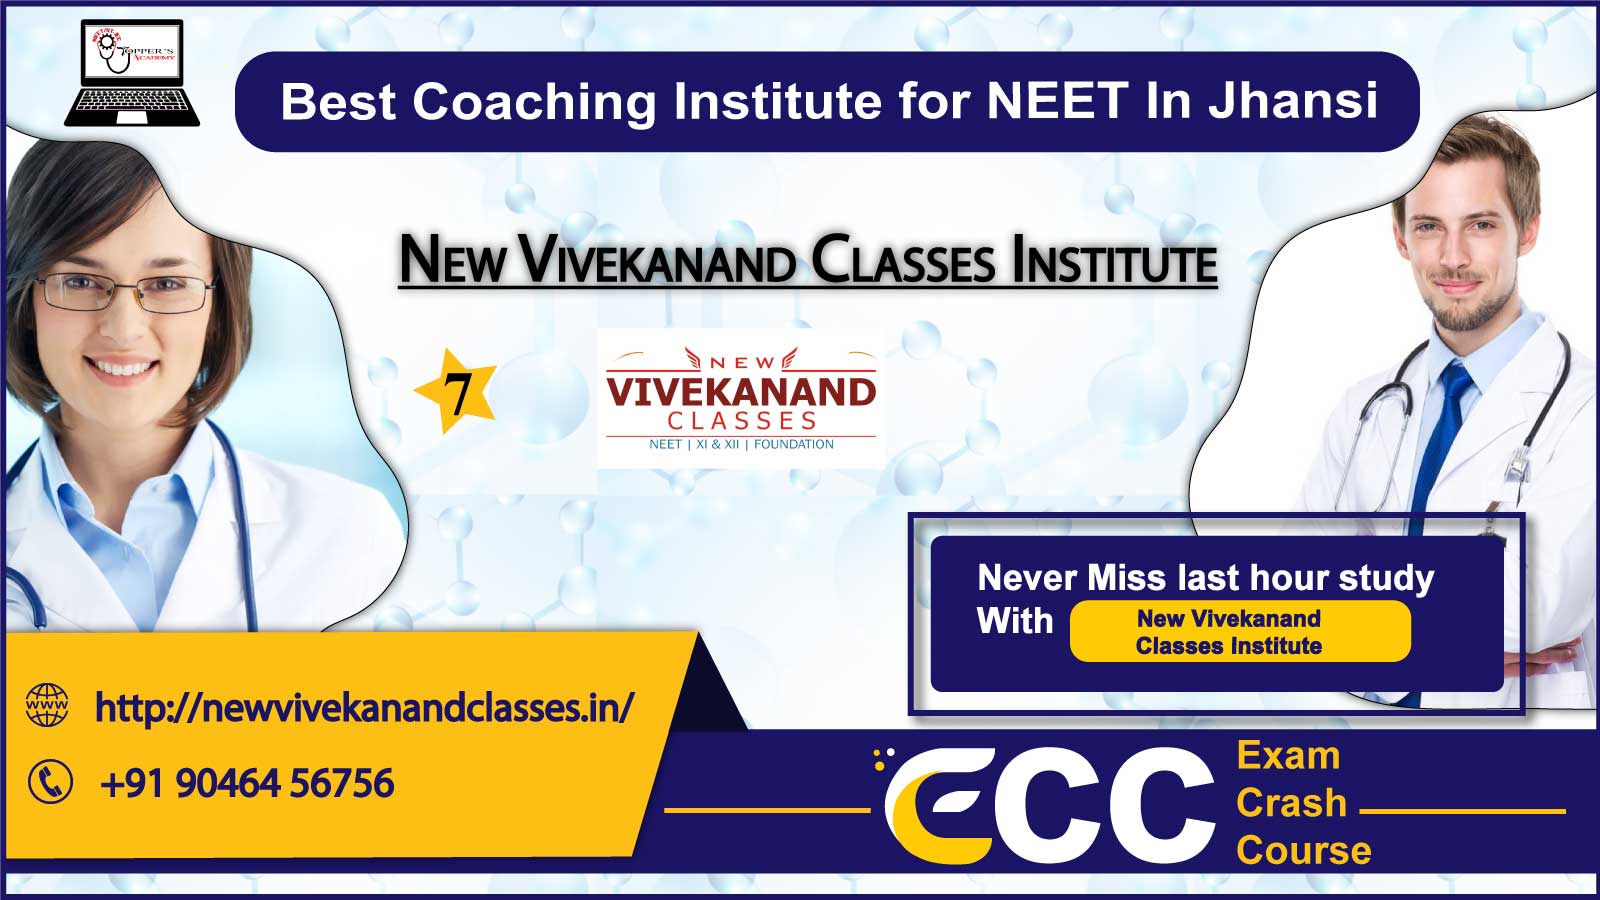 New Vivekanand Classes Institute in Jhansi